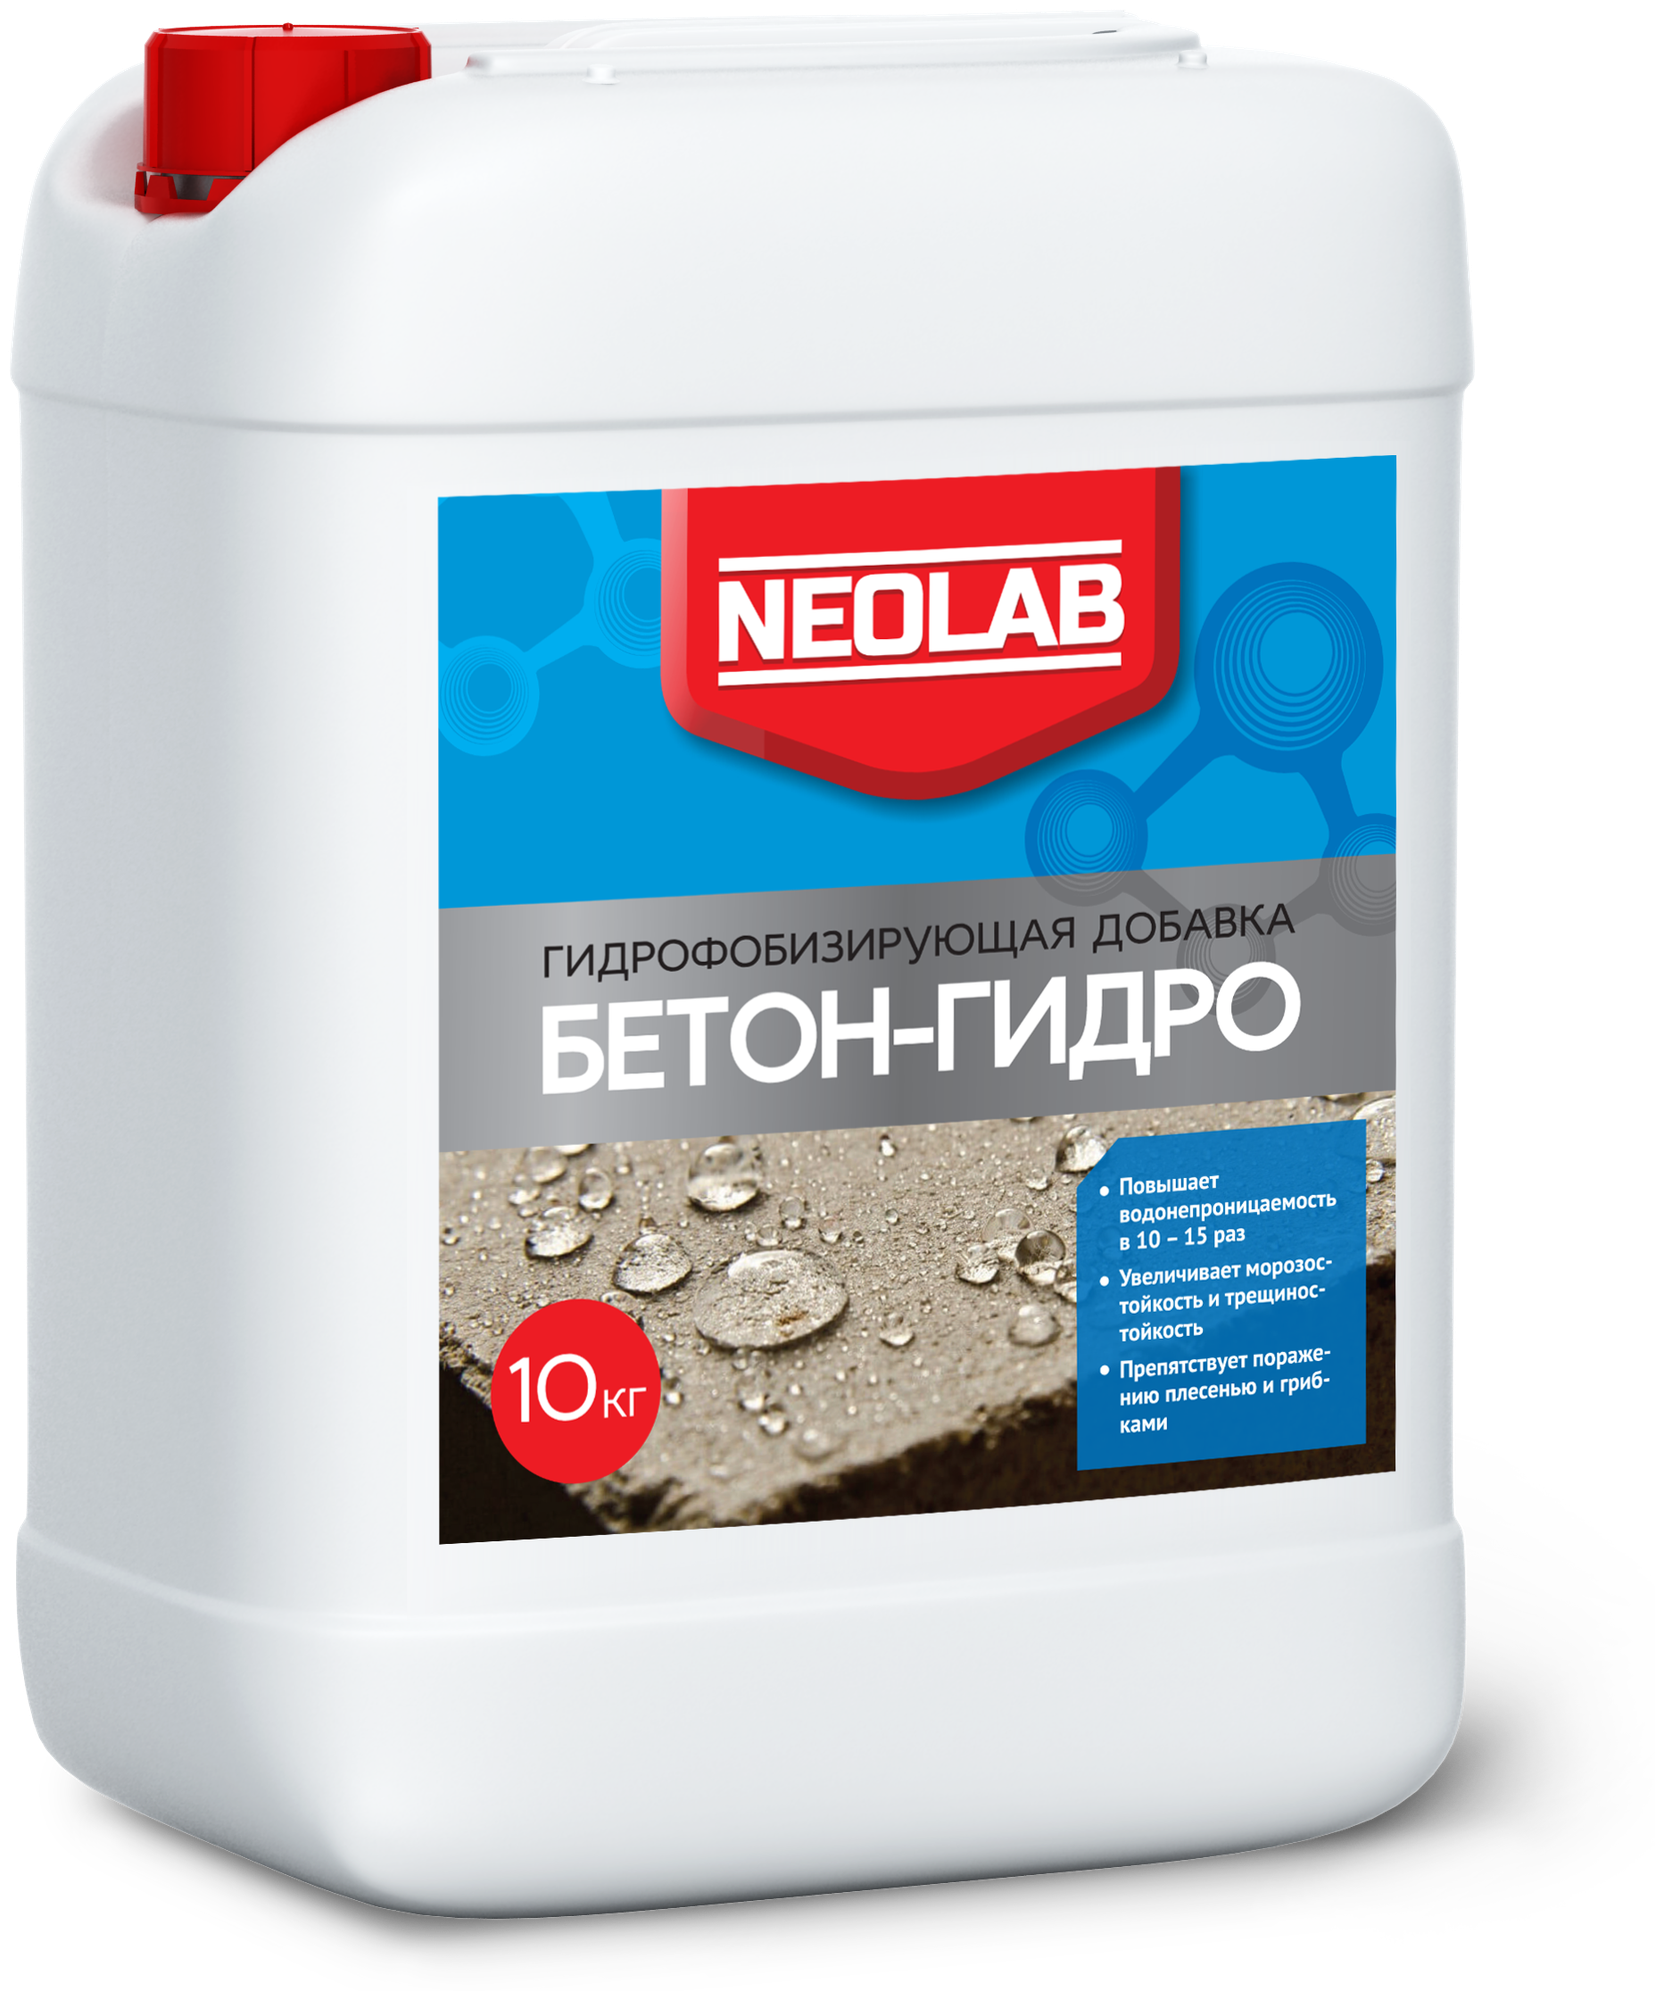 NEOLAB , бетон-гидро гидрофобизирующая добавка , 10 кг